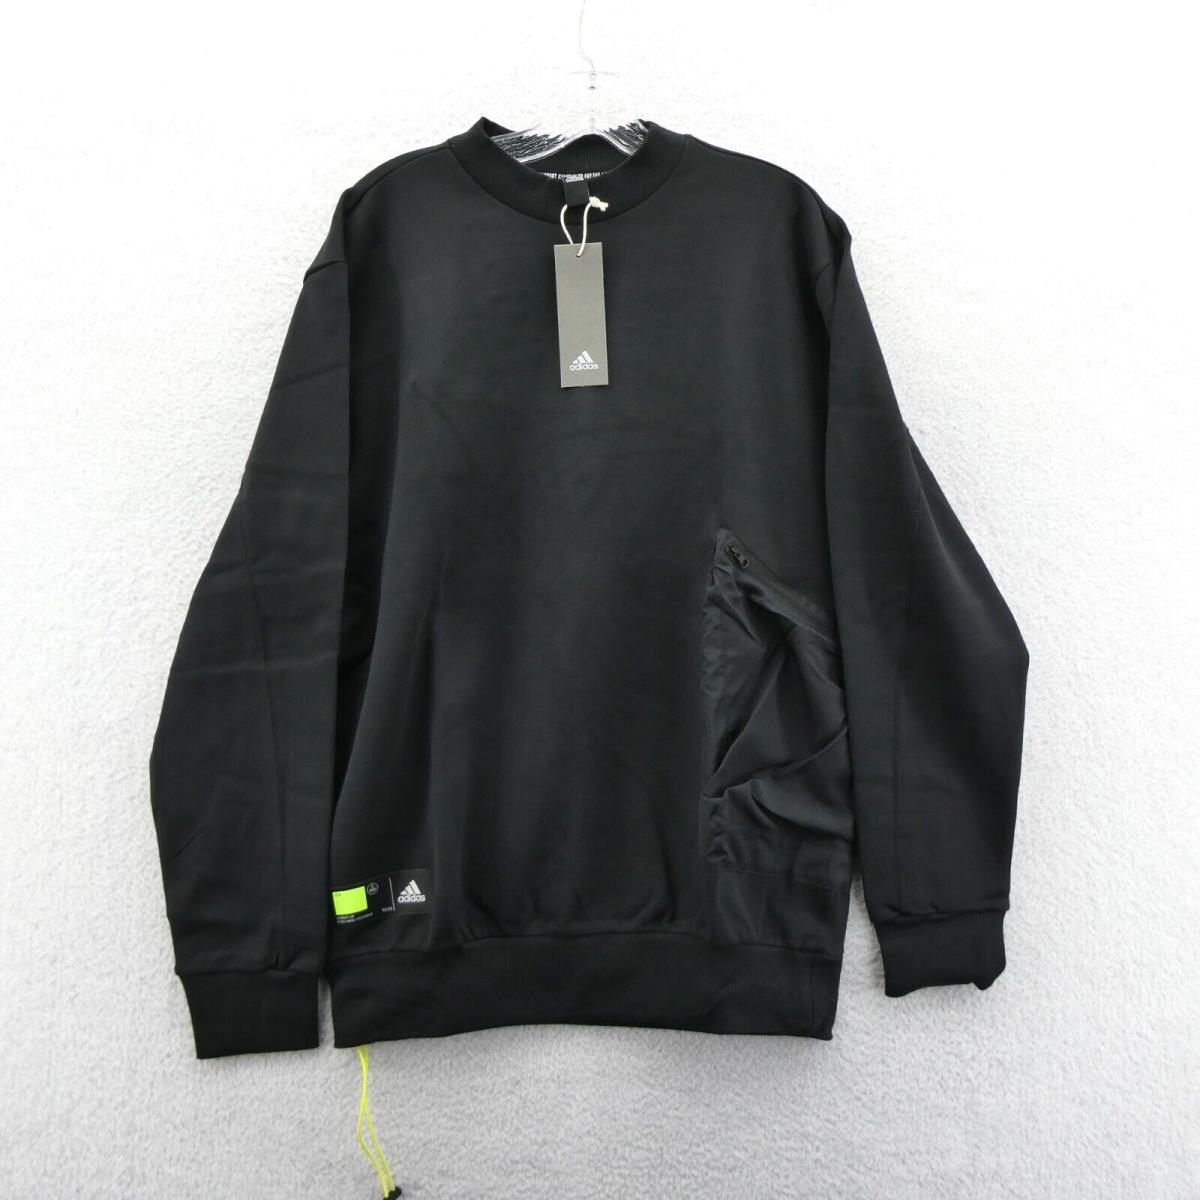 Adidas Crew Mens Medium Black Zne Tech Sweatshirt Sportswear Knit Zip Pocket